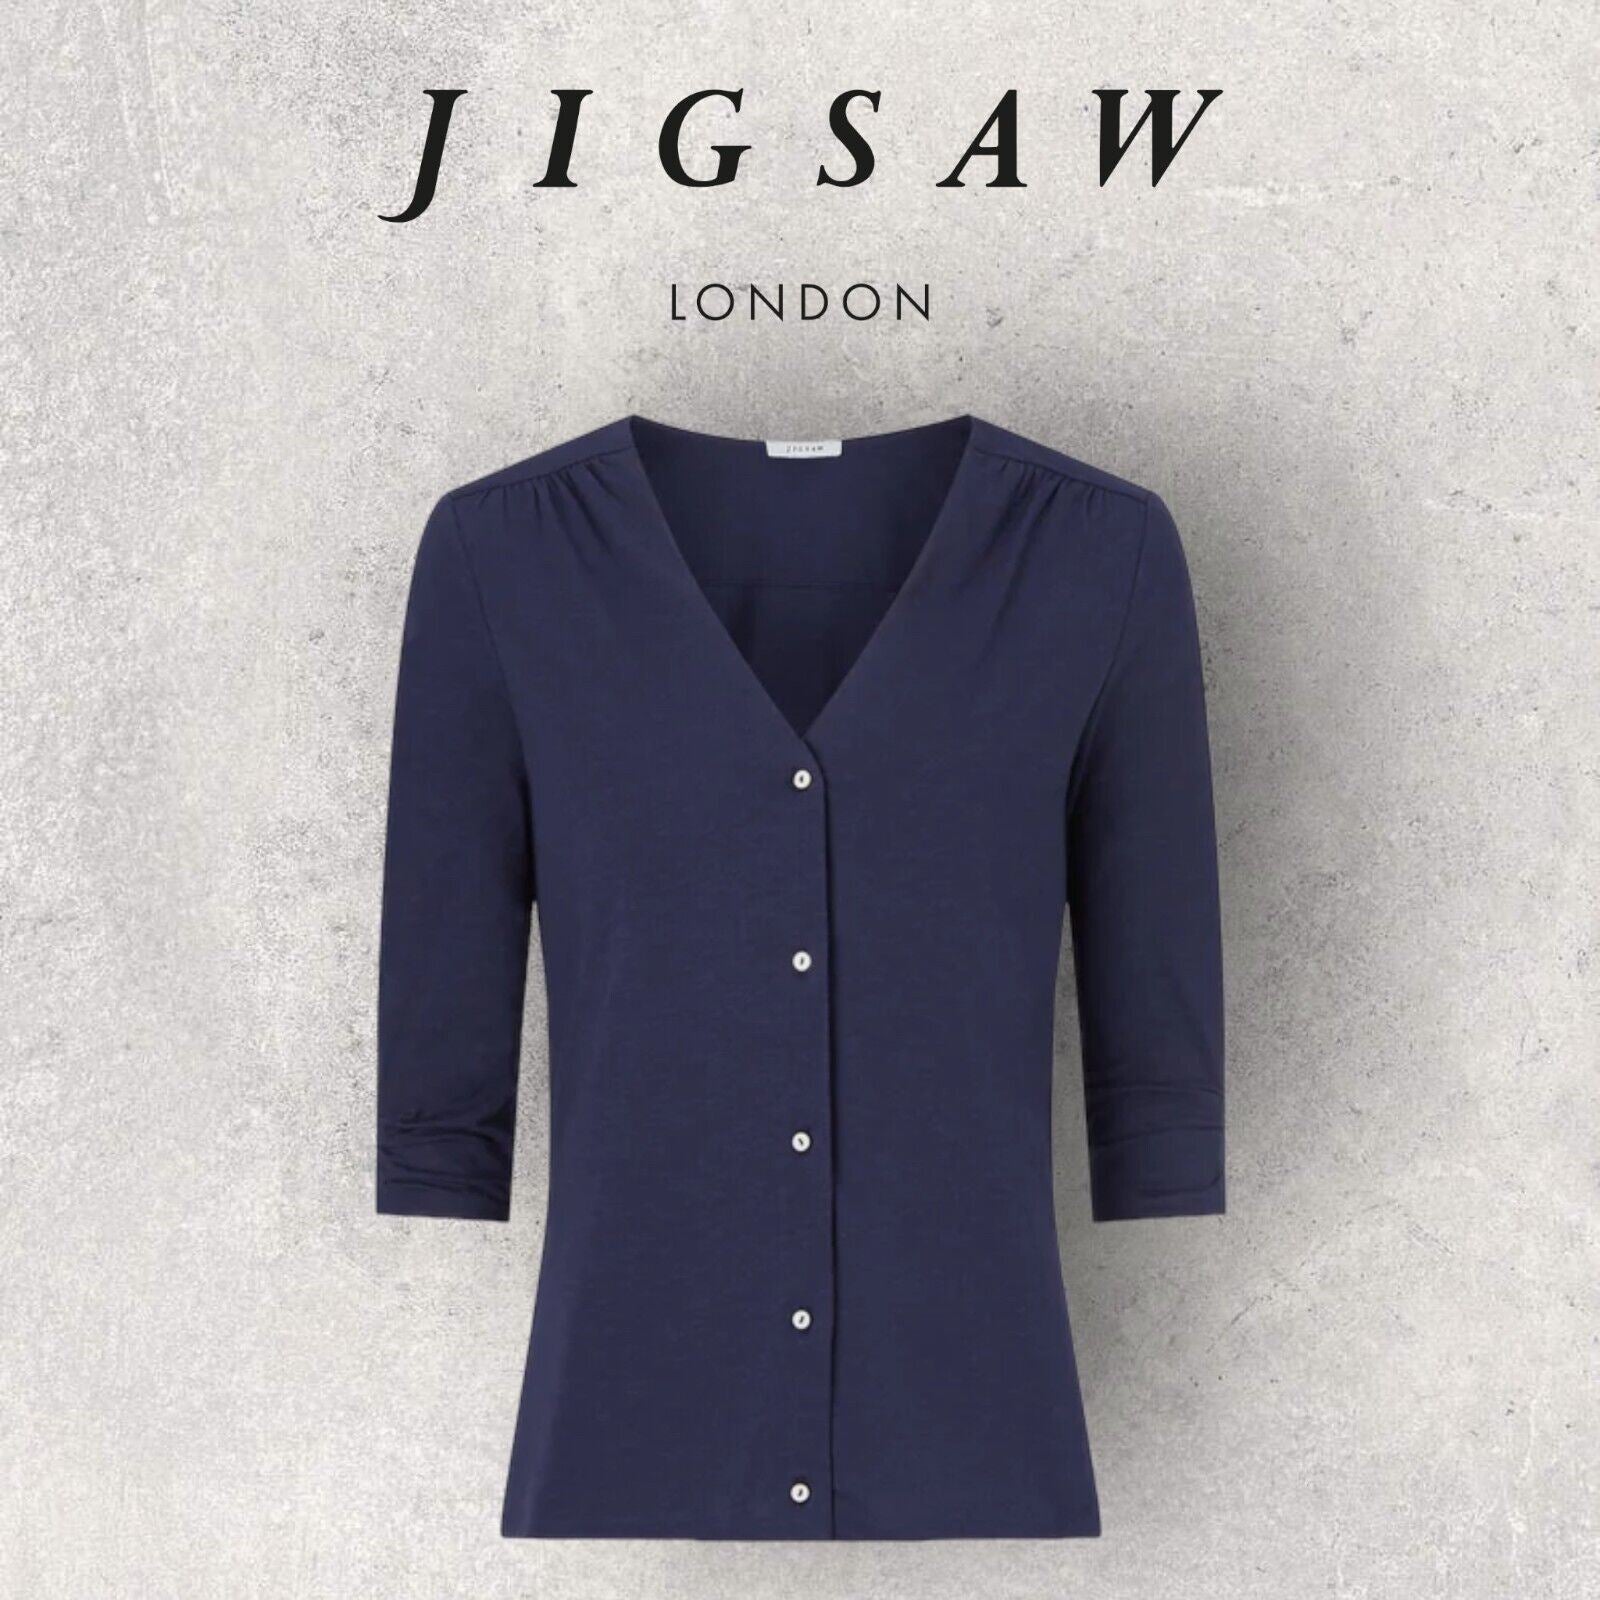 Jigsaw London Navy Jersey V Neck Button Top UK 10 US 6 EU 38 RRP £65 Timeless Fashions